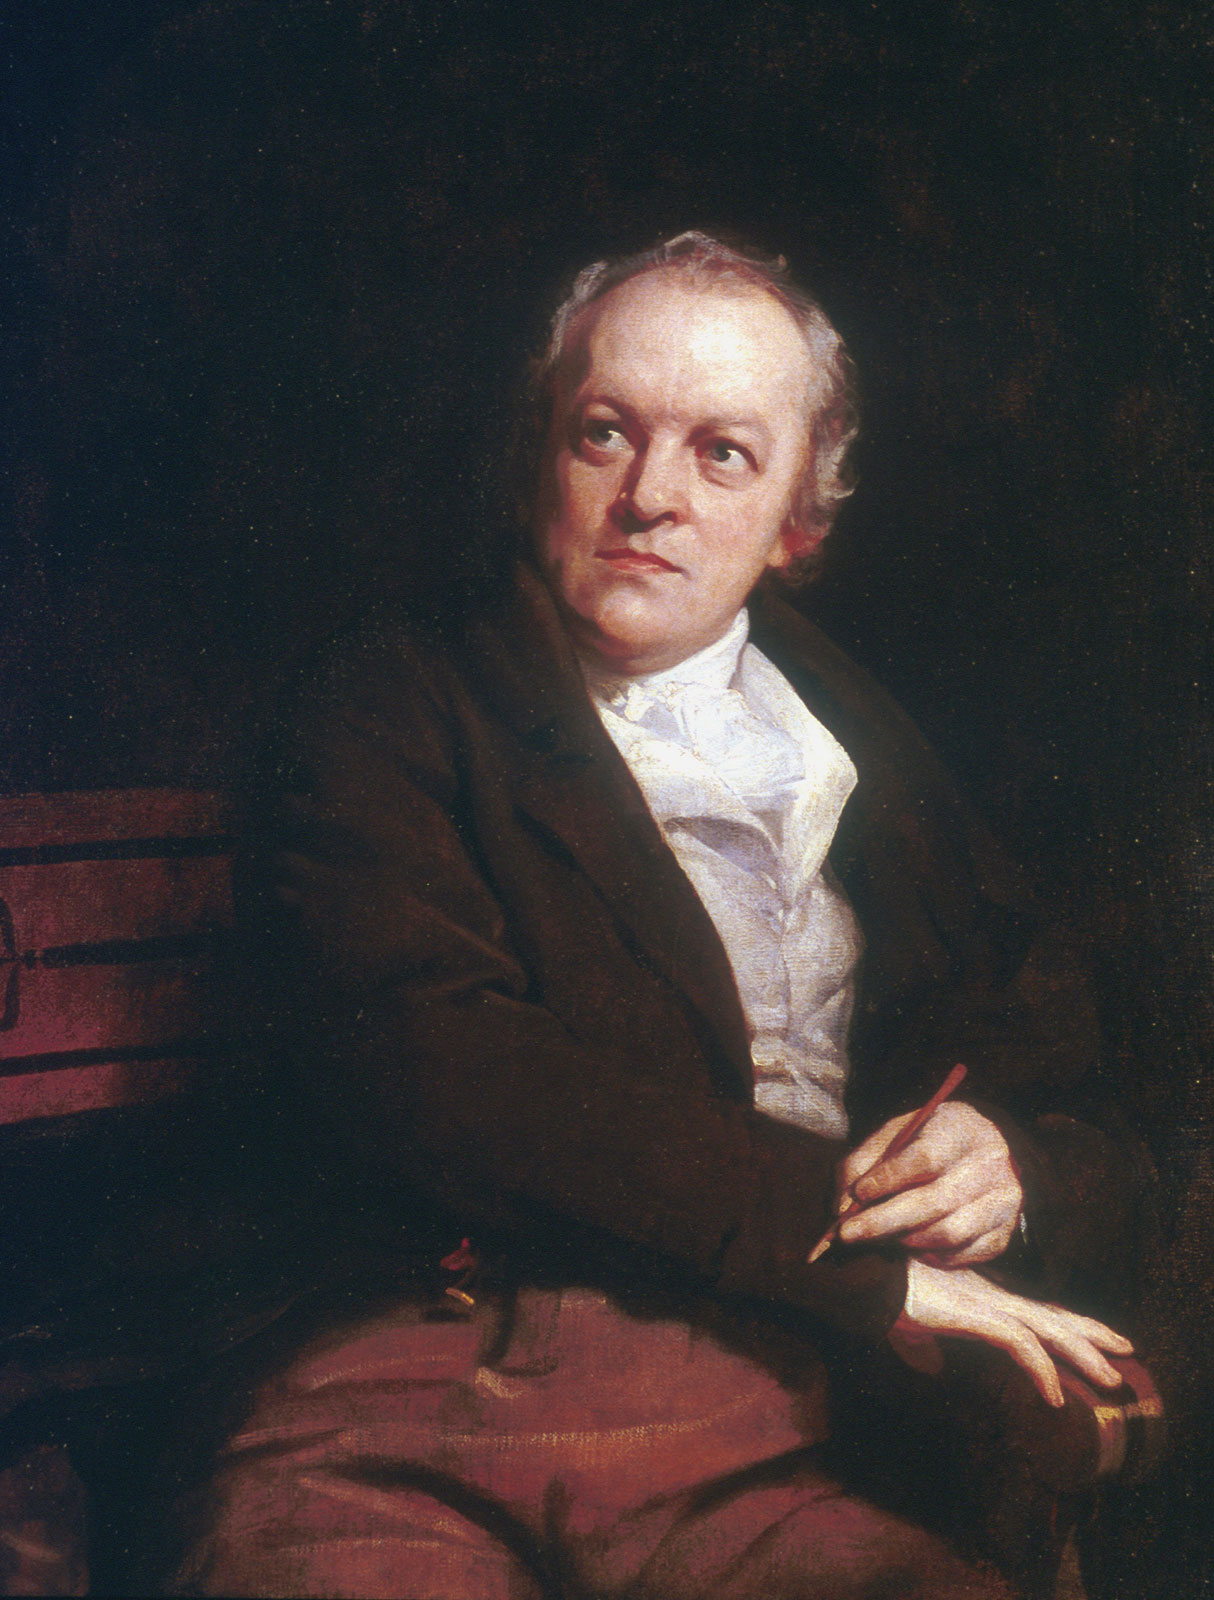 William-Blake-huile-toile-Thomas-Phillips-National-1807